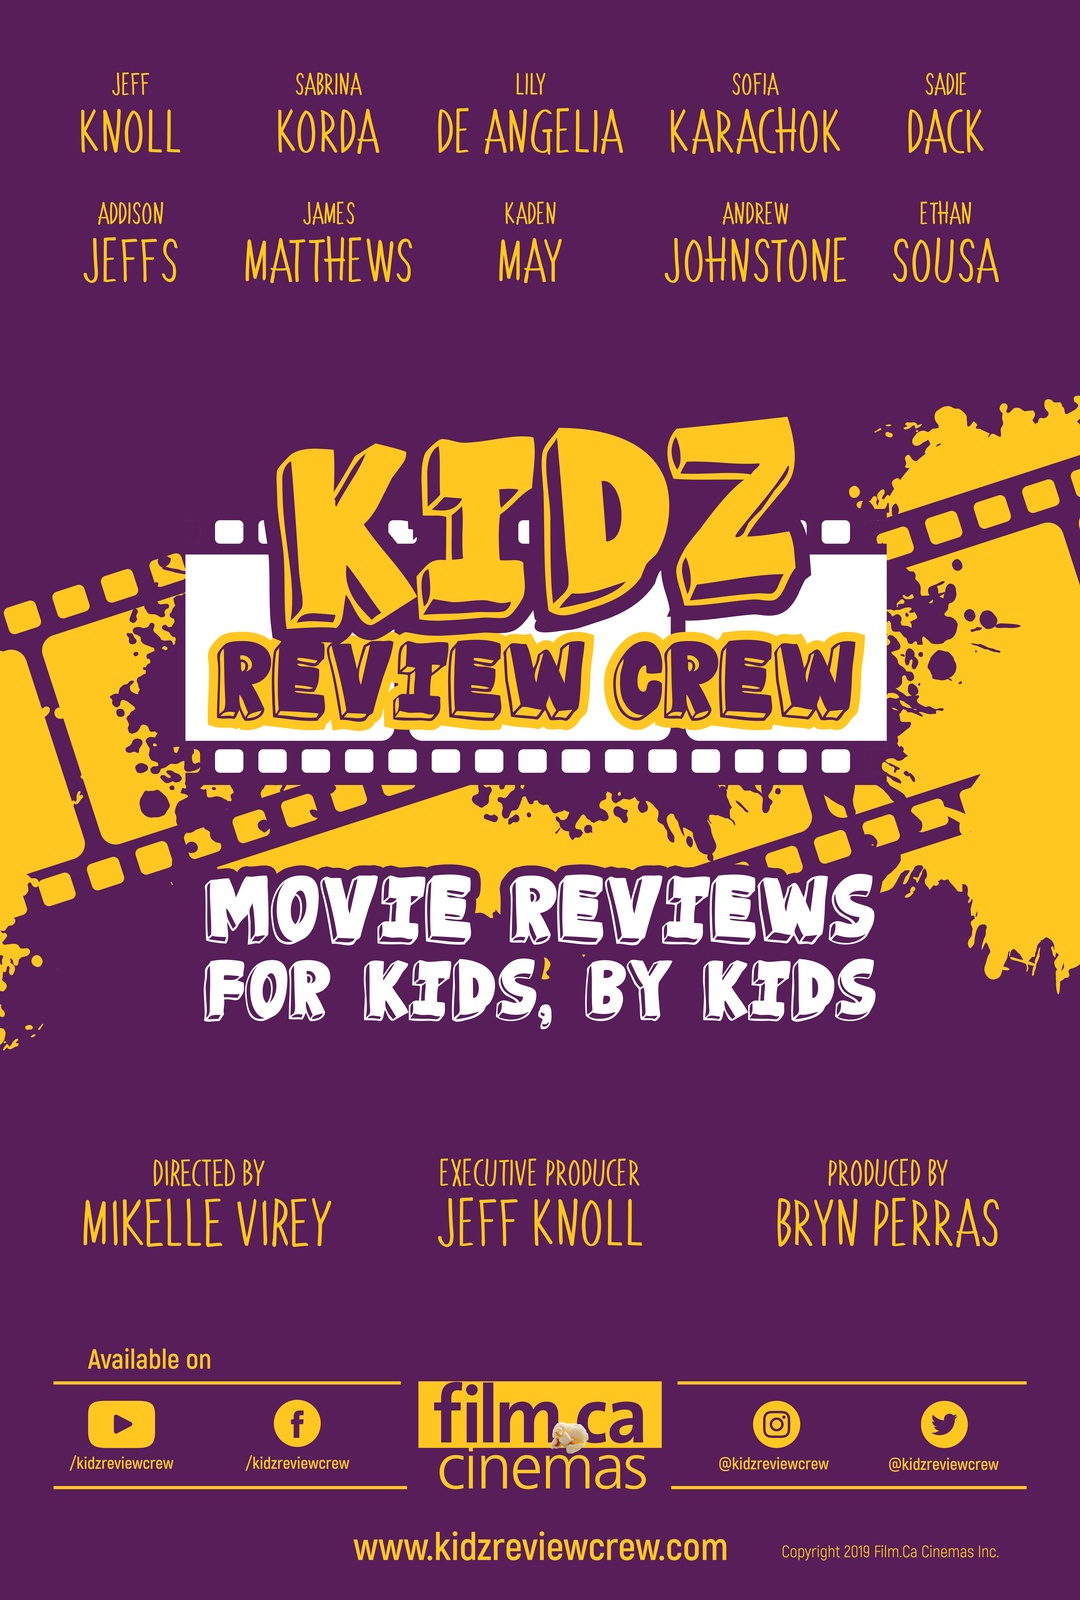 Kidz Review Crew